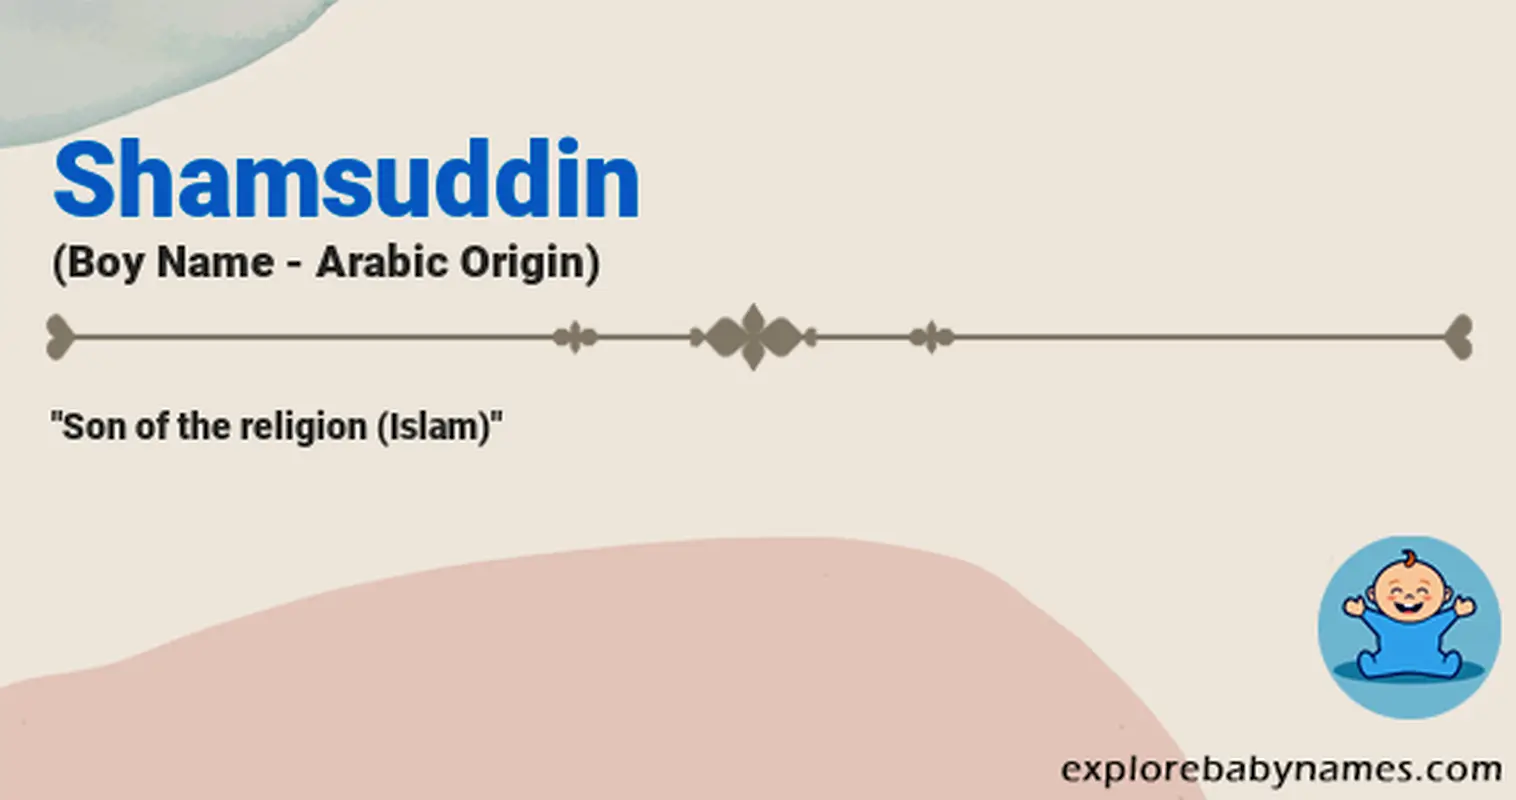 Meaning of Shamsuddin